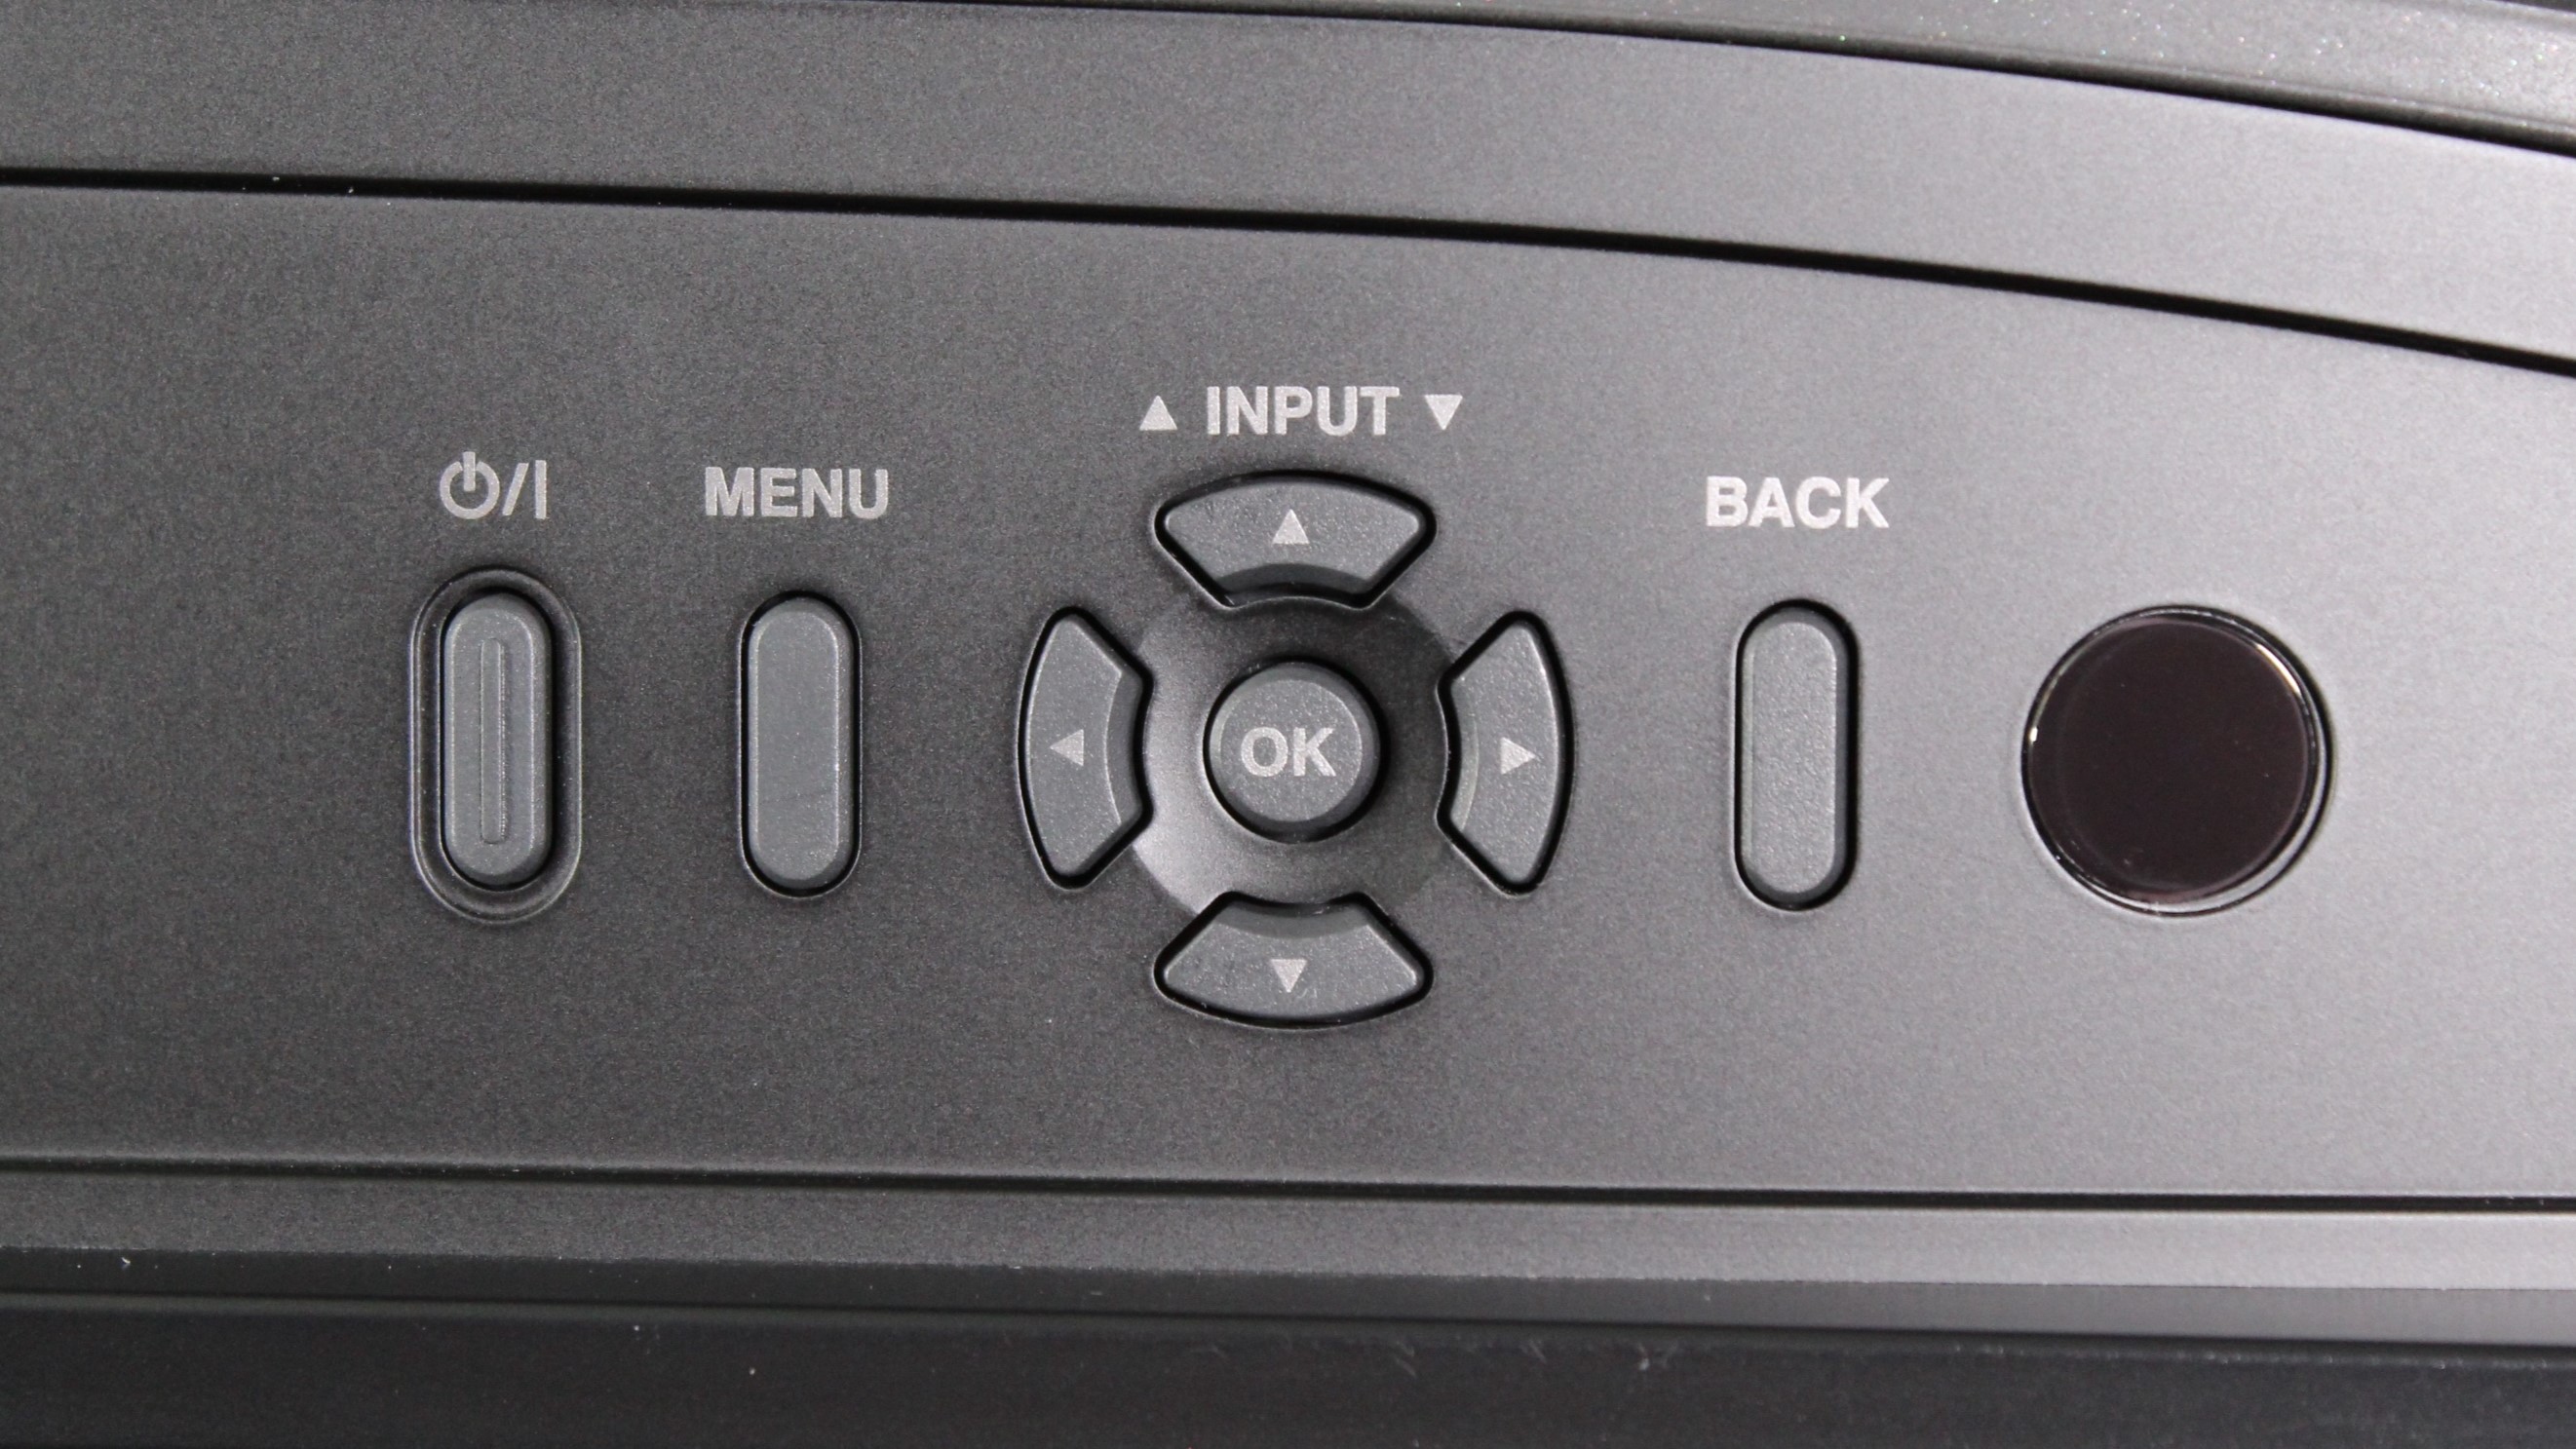 JVC DLA-NZ800 top panel controls